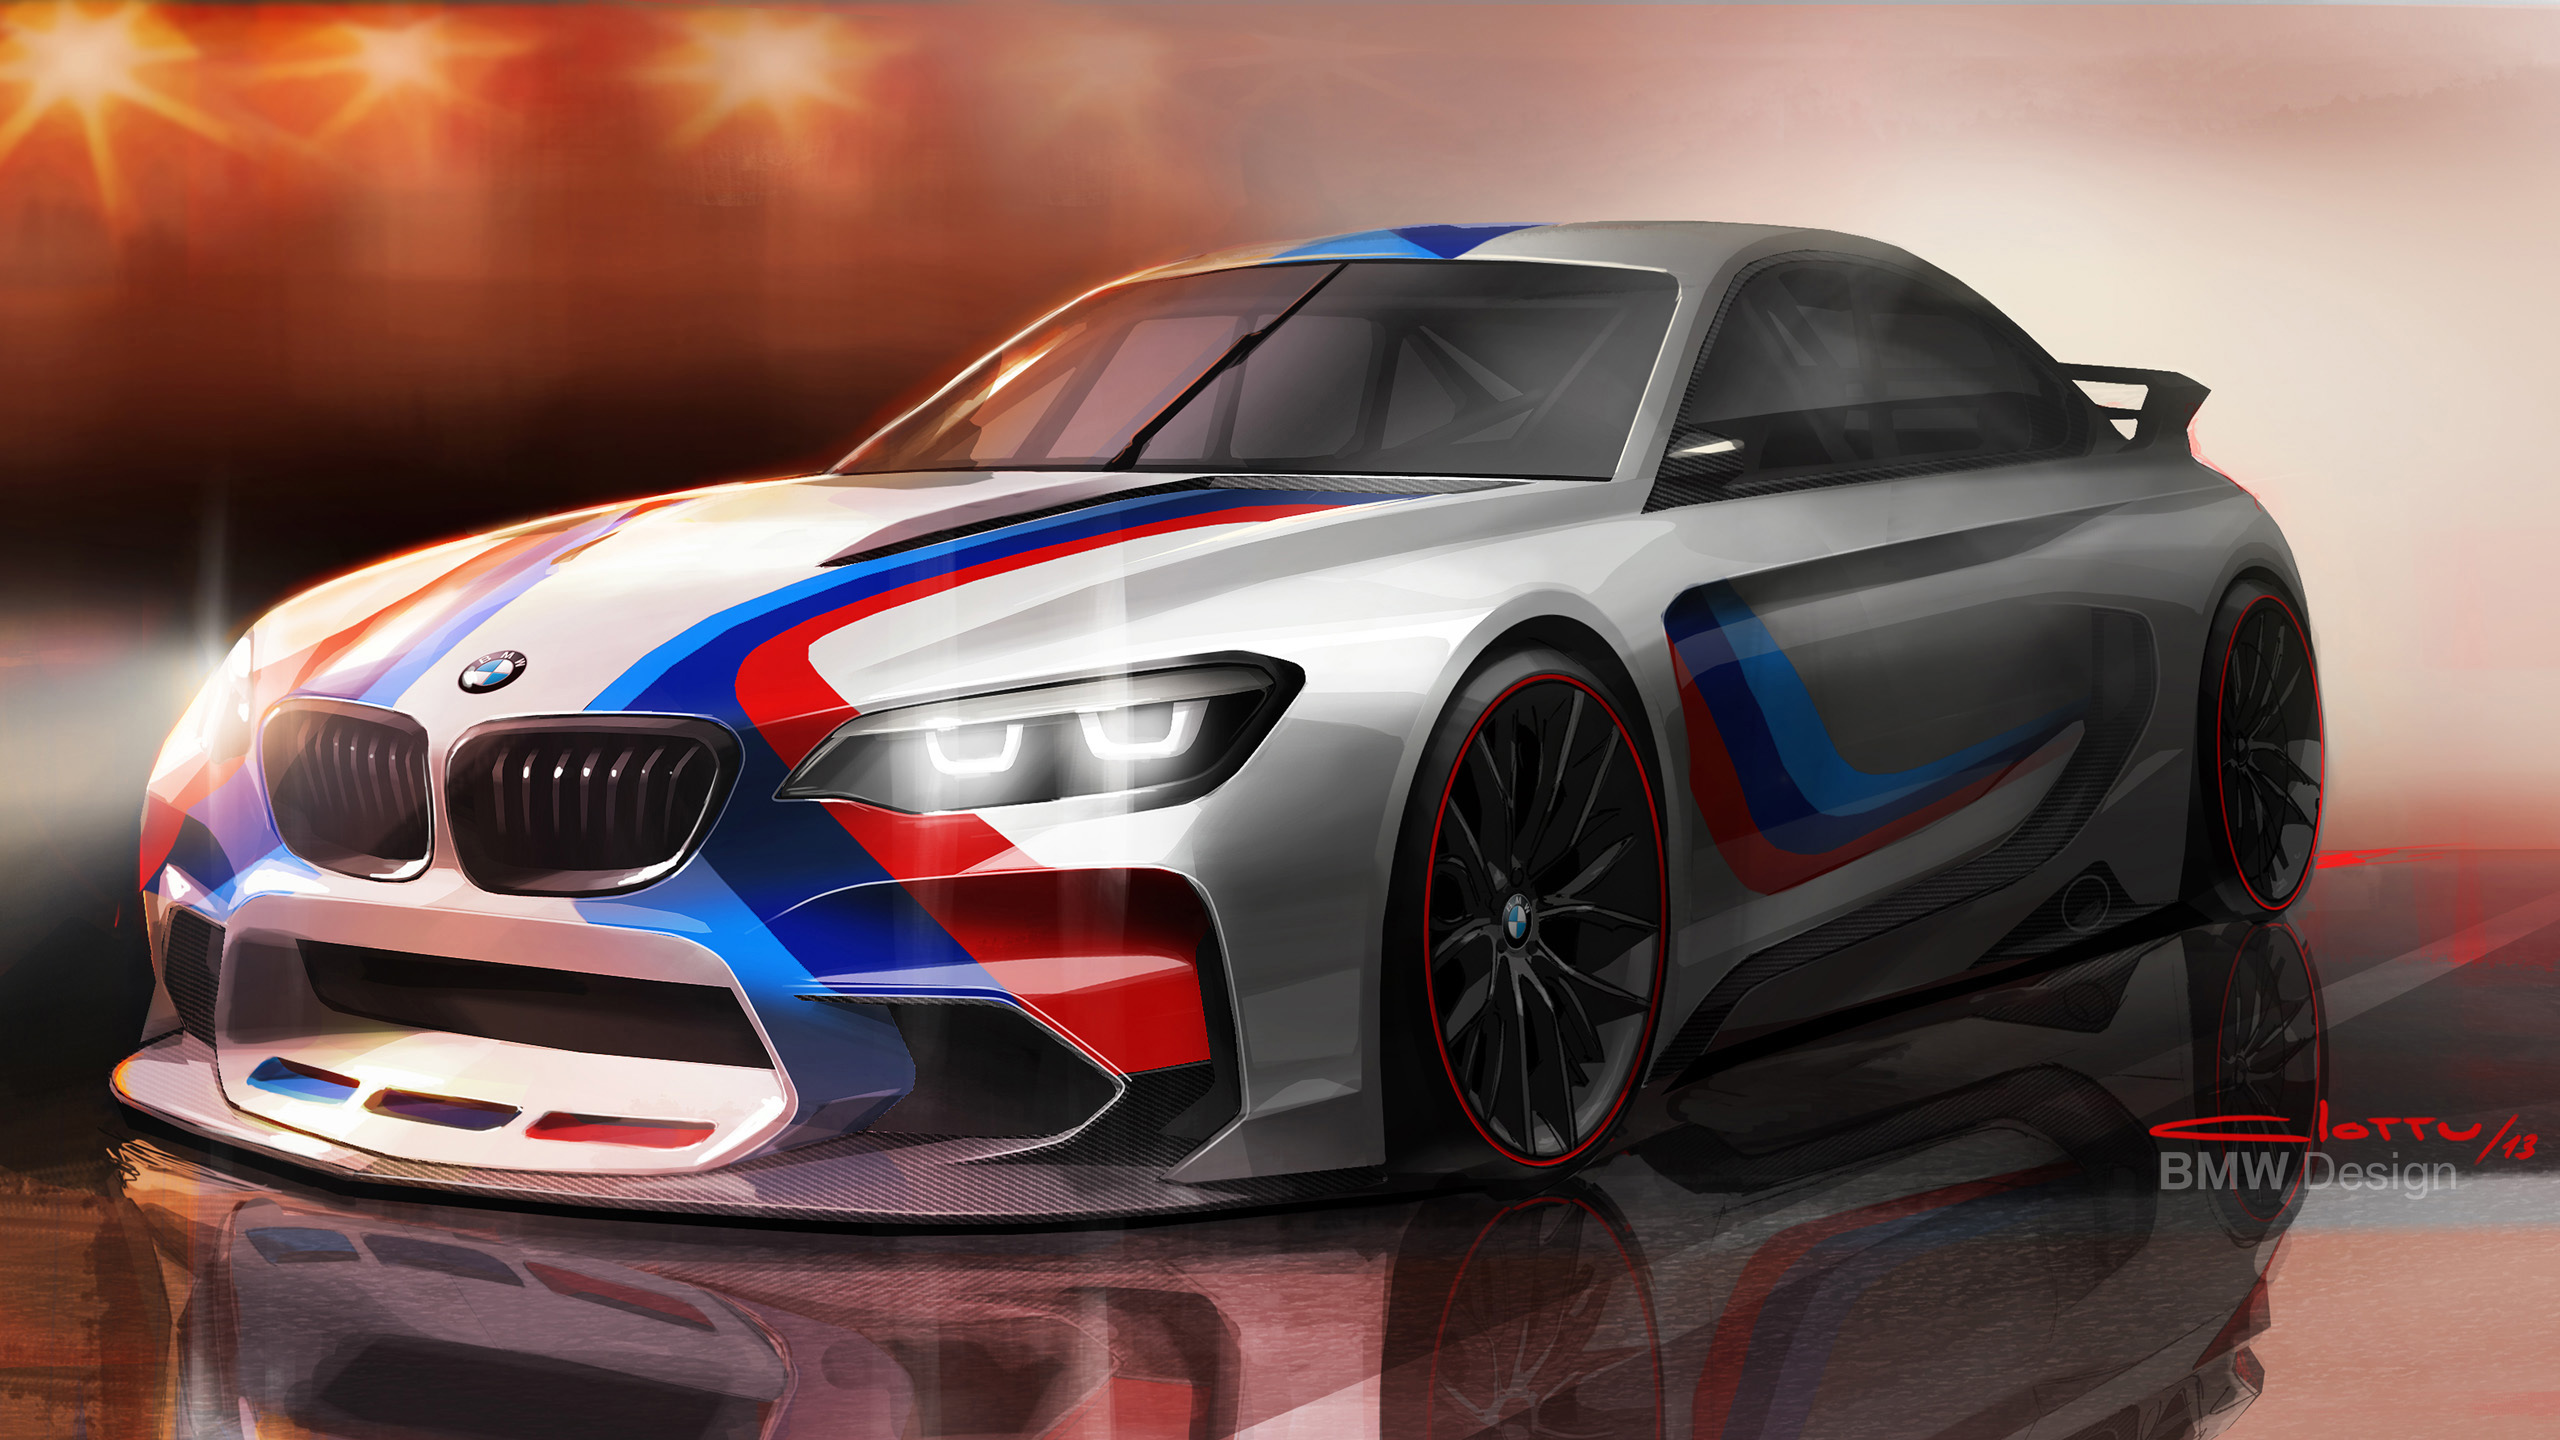 2014 BMW Vision Gran Turismo Concept Wallpaper | HD Car Wallpapers